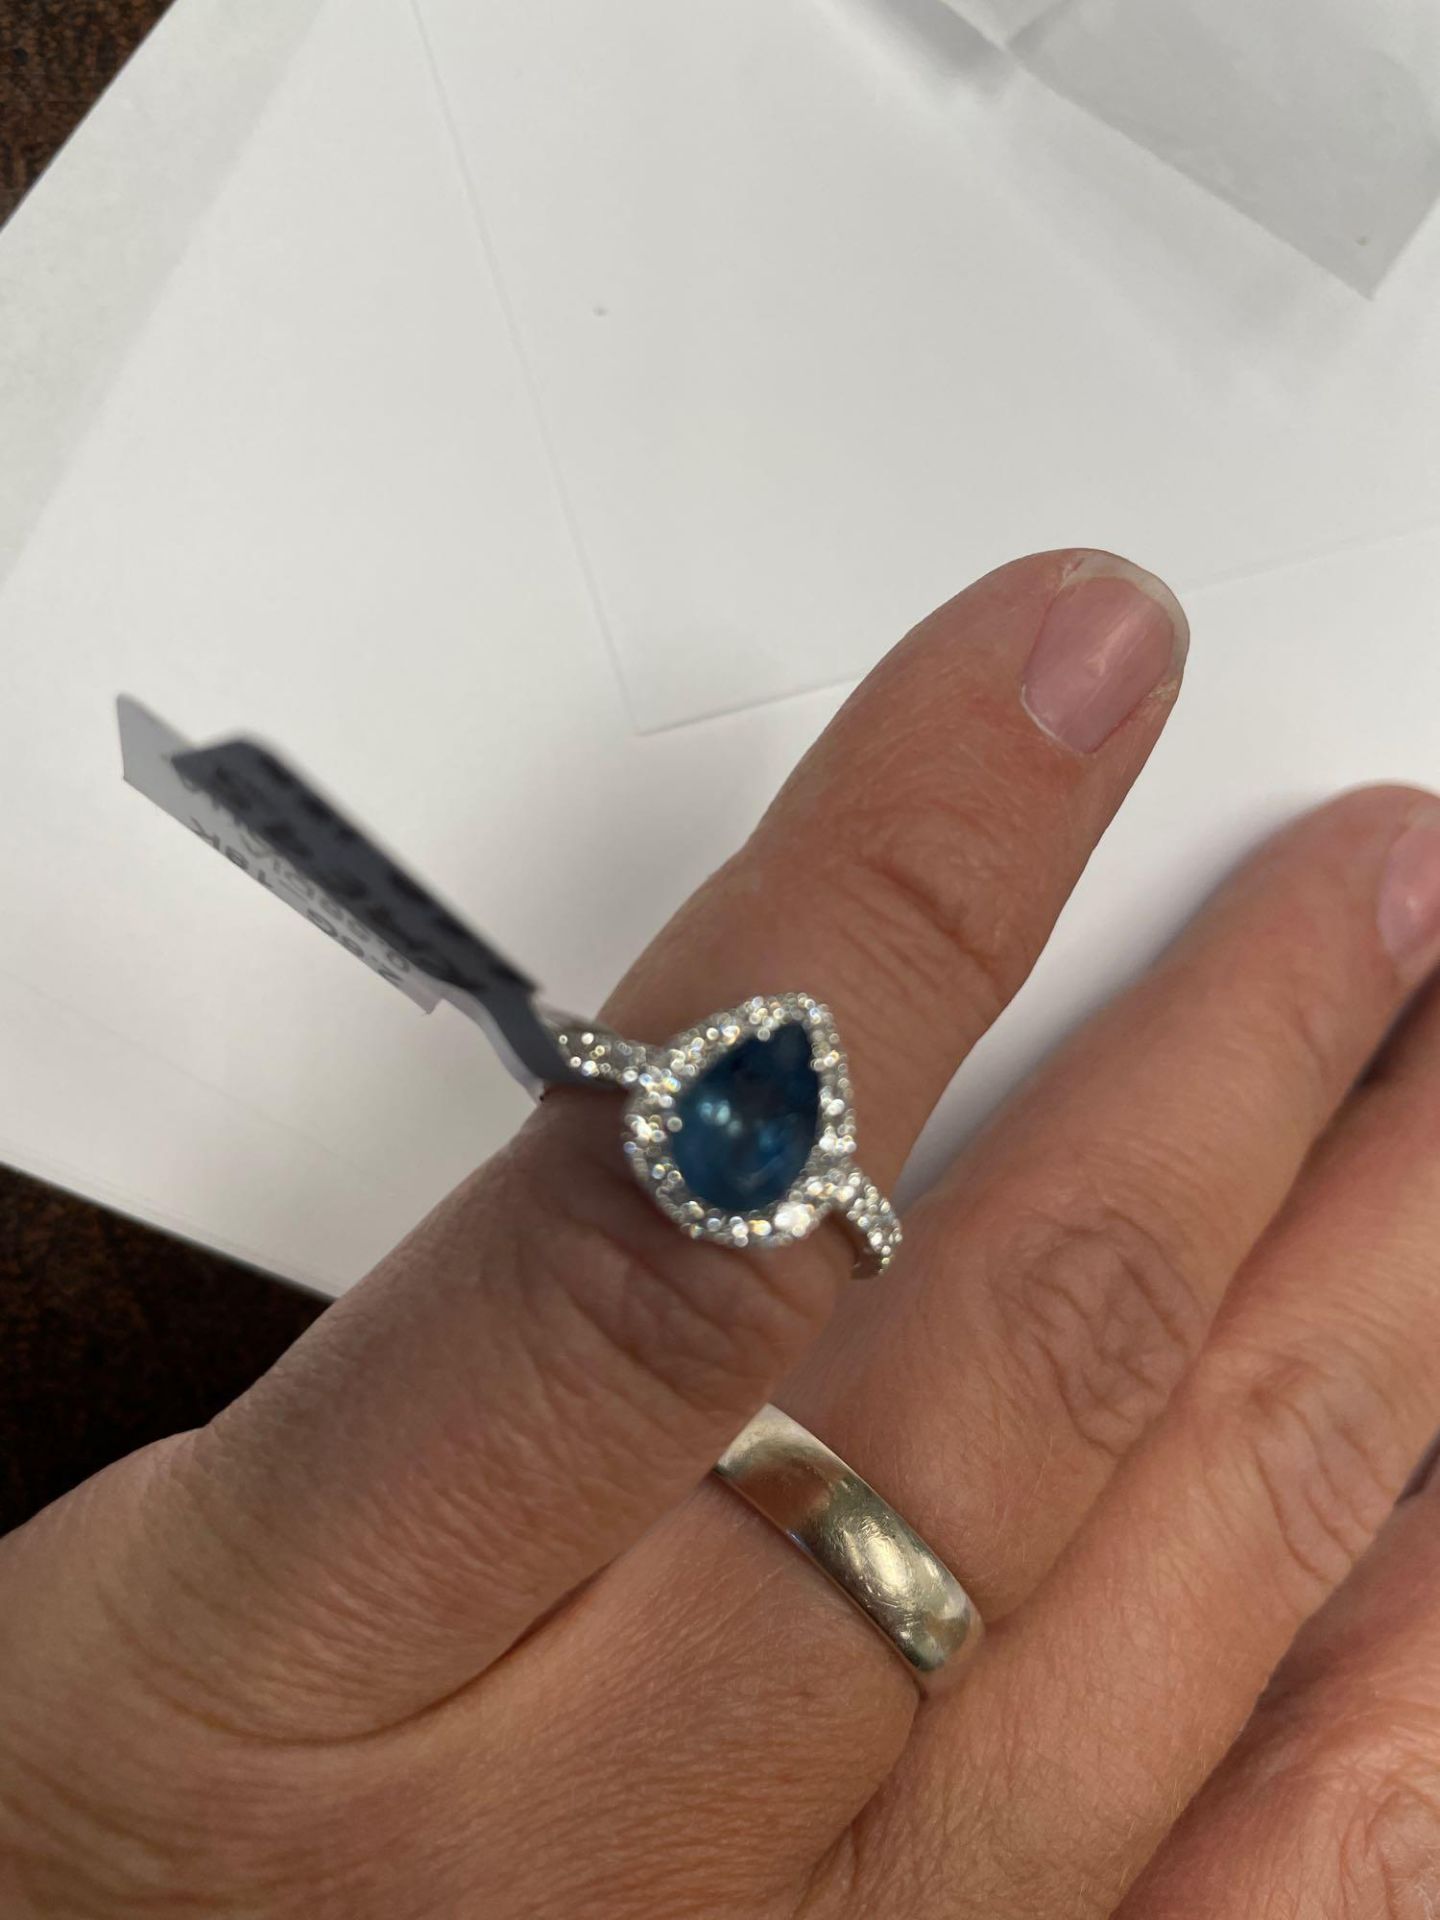 Rare Dark aquamarine and diamond ring, rare dark color from the Tatu Mine in Brazil